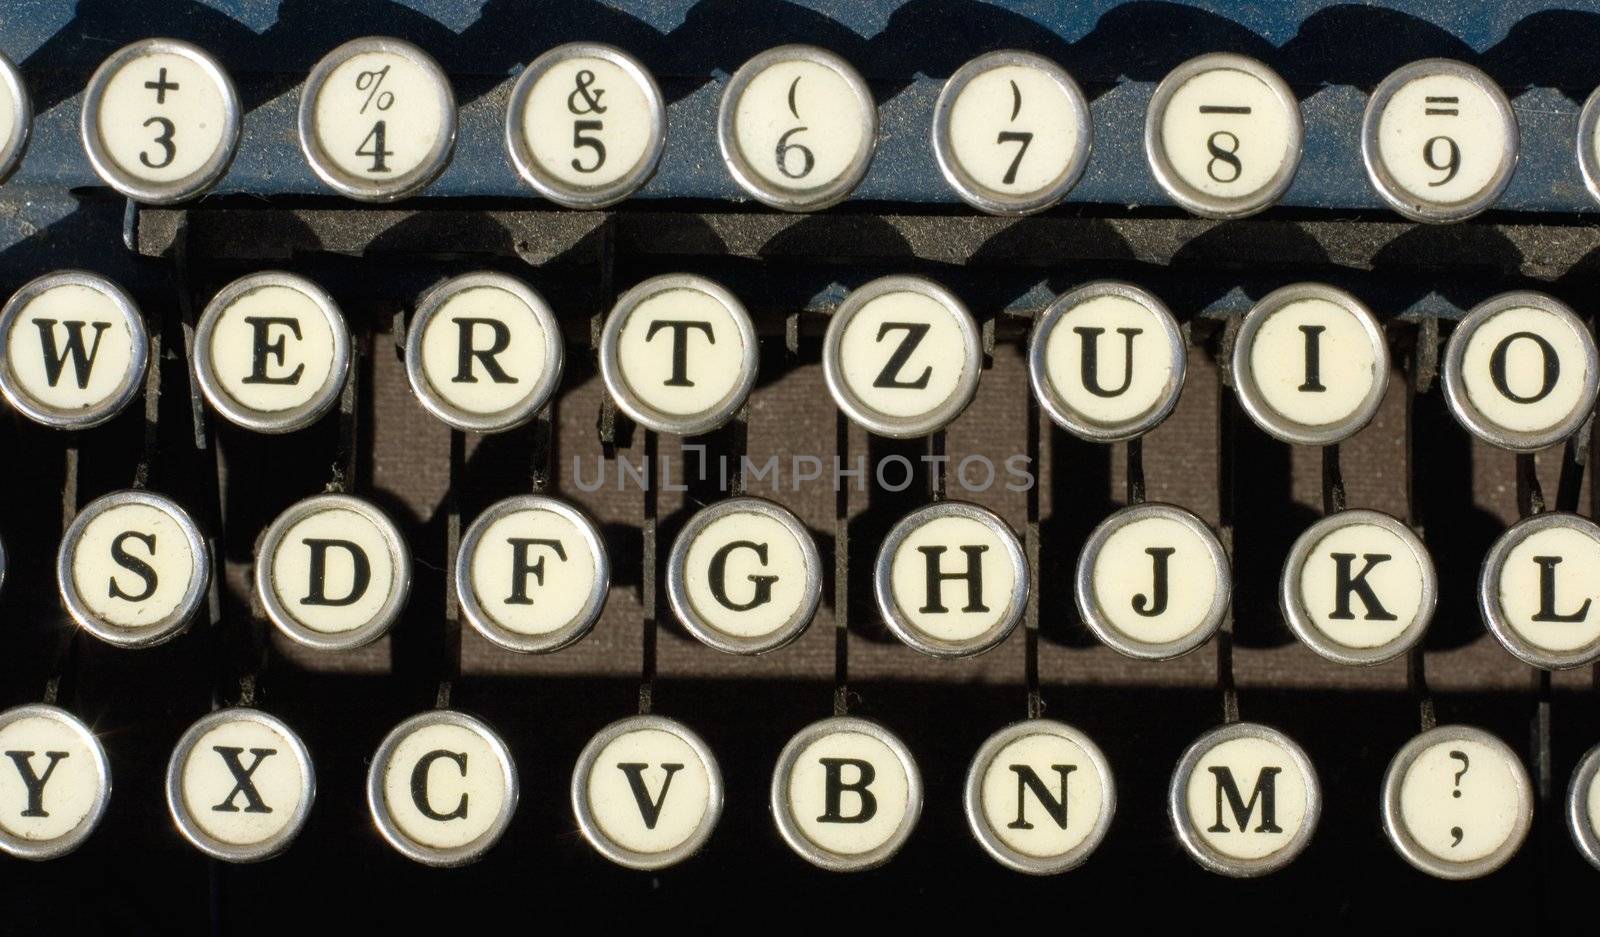 Antique typewriter keys by mzrark